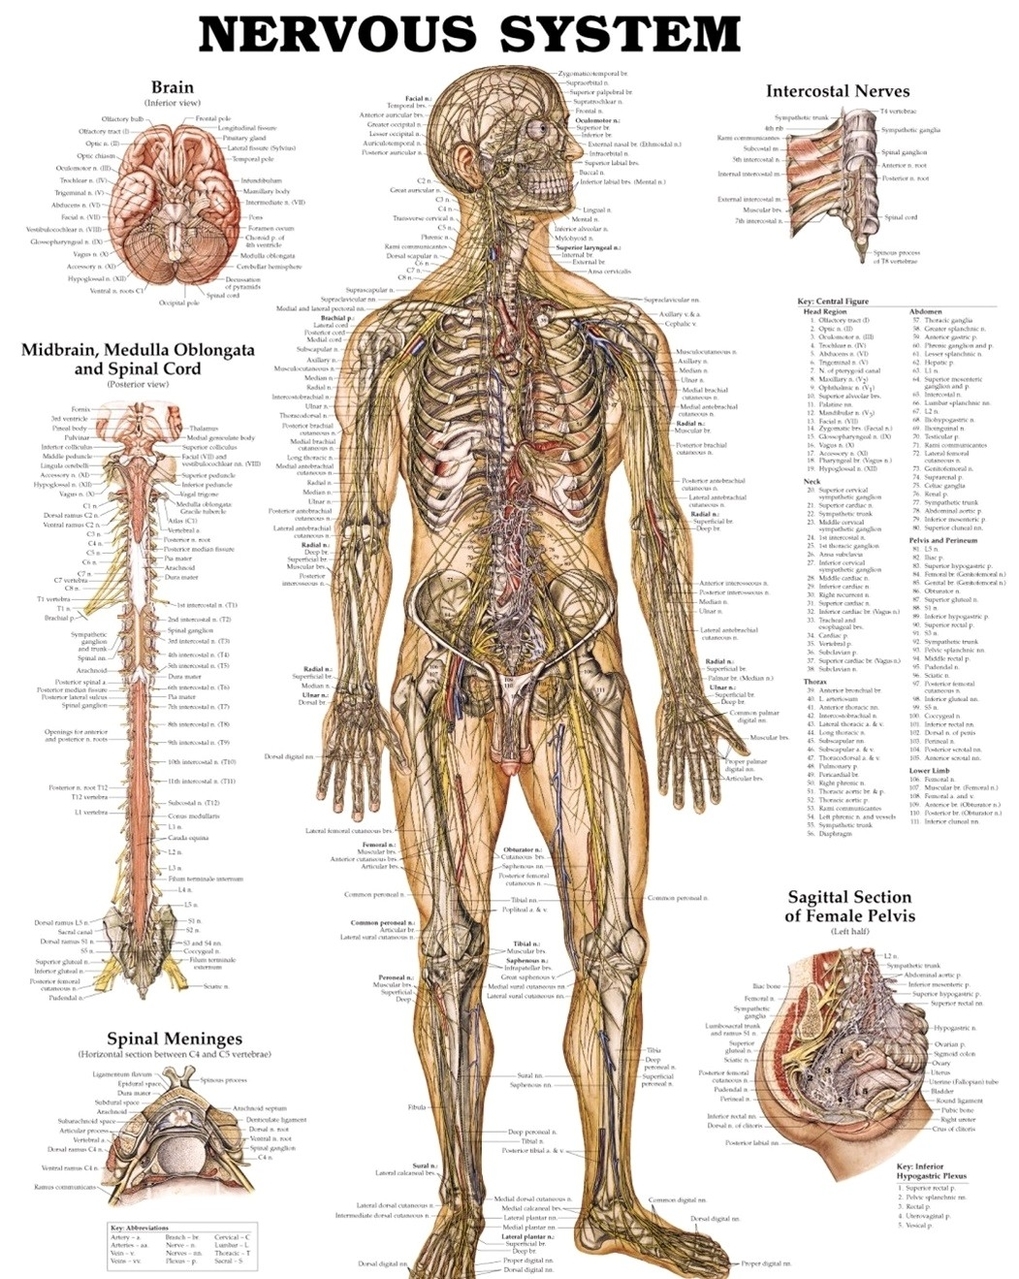 Human nervous system diagram